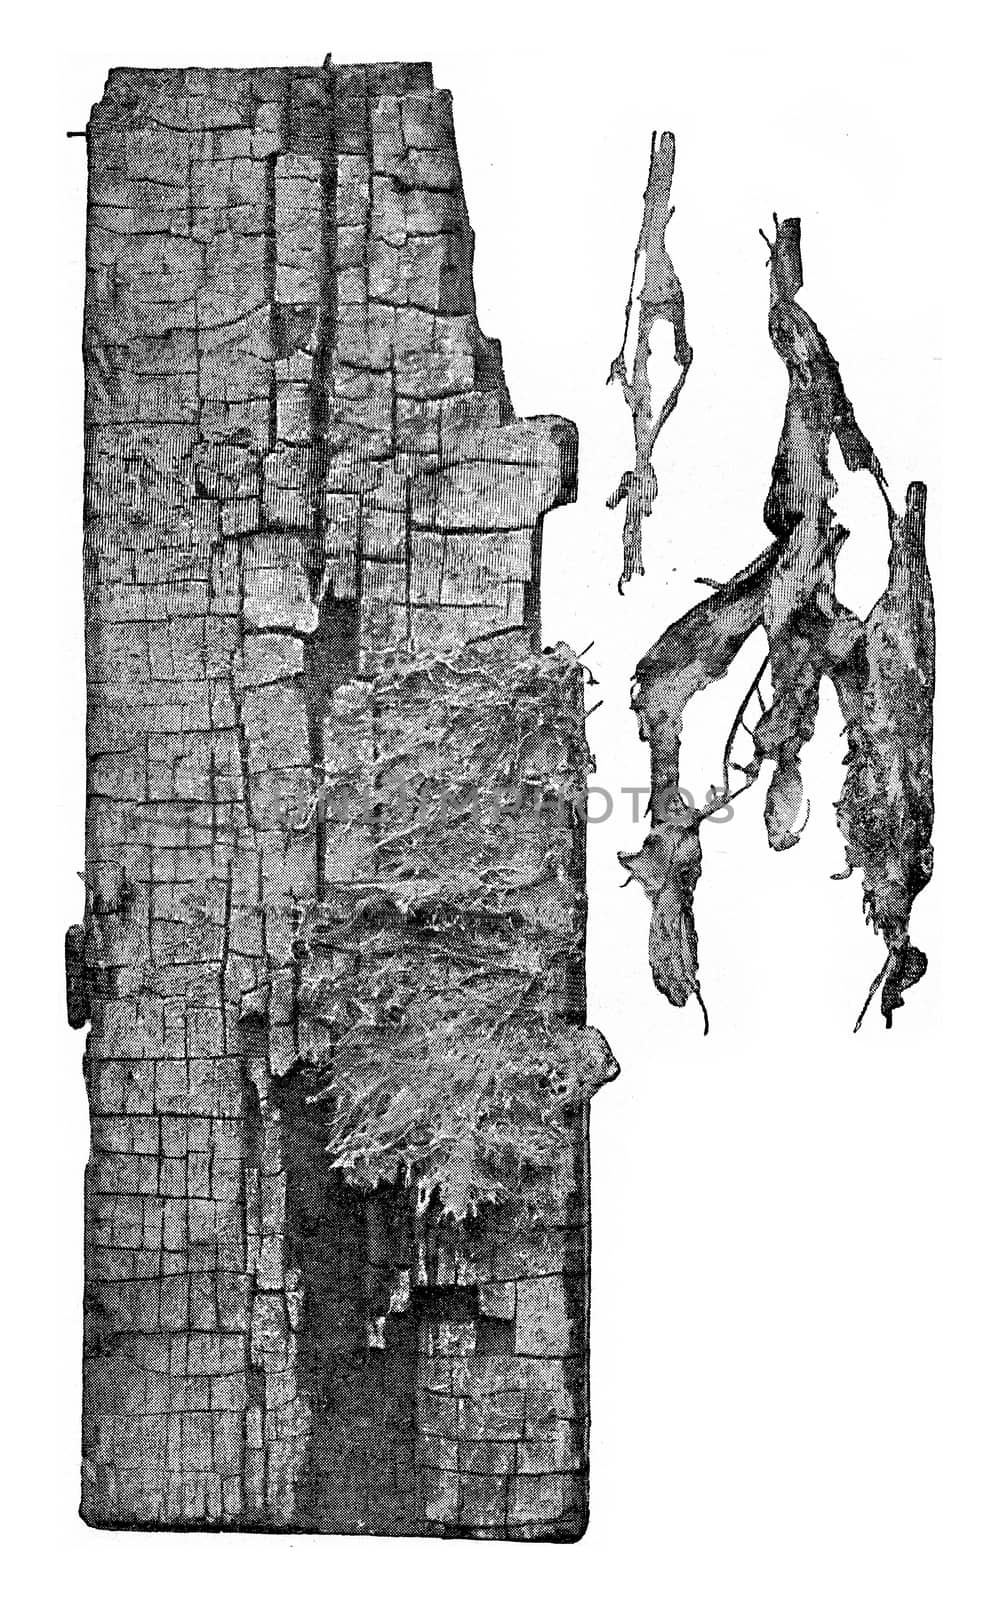 Wood attack by Merulius, vintage engraving. by Morphart